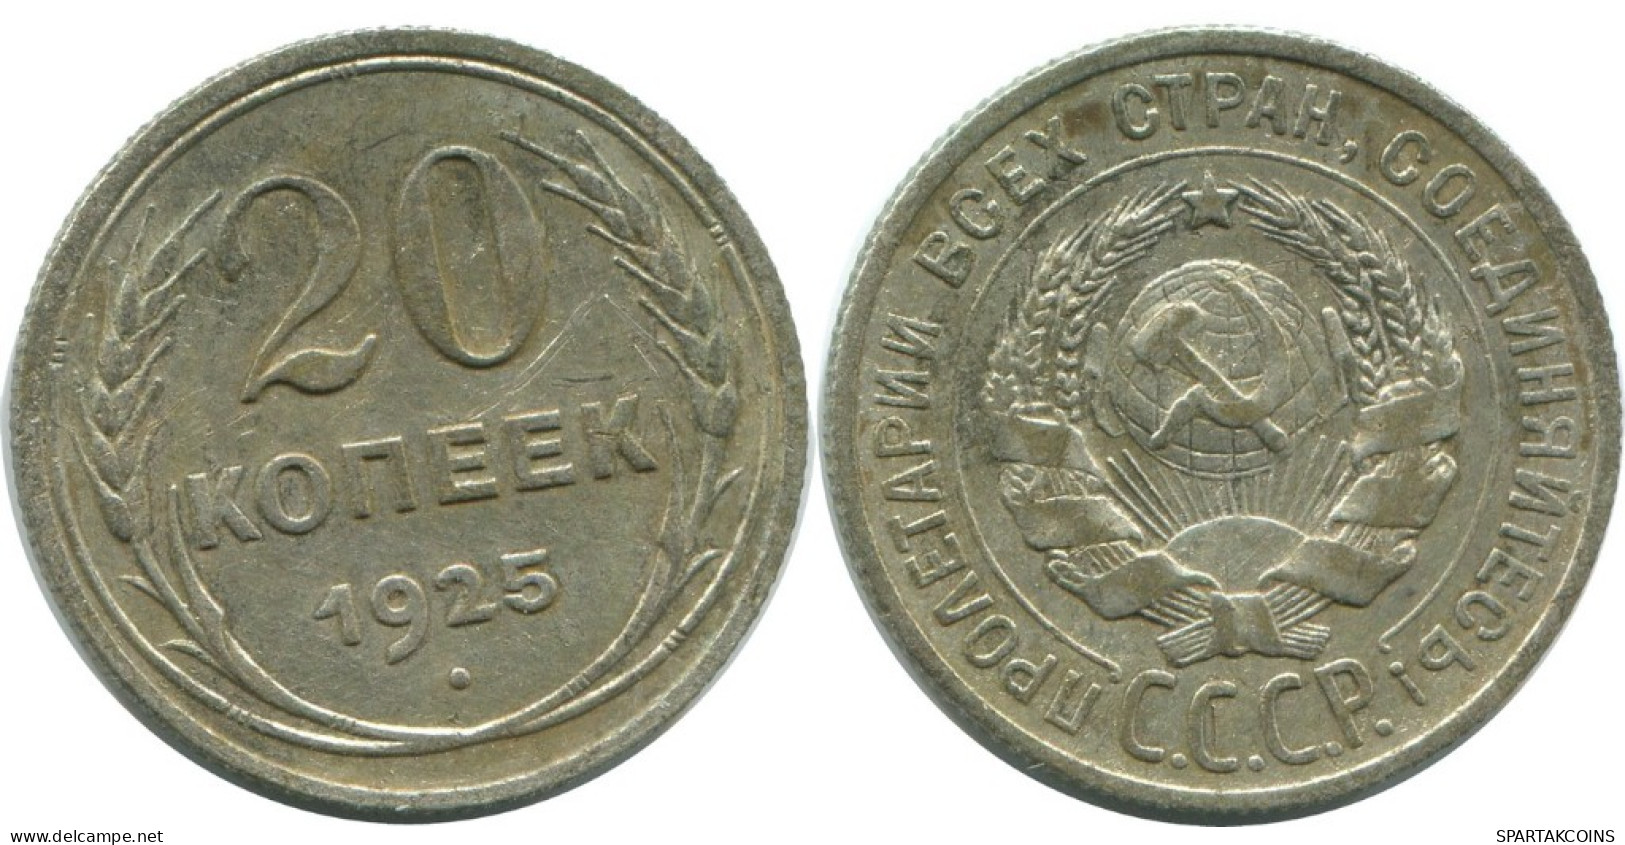 20 KOPEKS 1925 RUSSLAND RUSSIA USSR SILBER Münze HIGH GRADE #AF313.4.D.A - Rusland